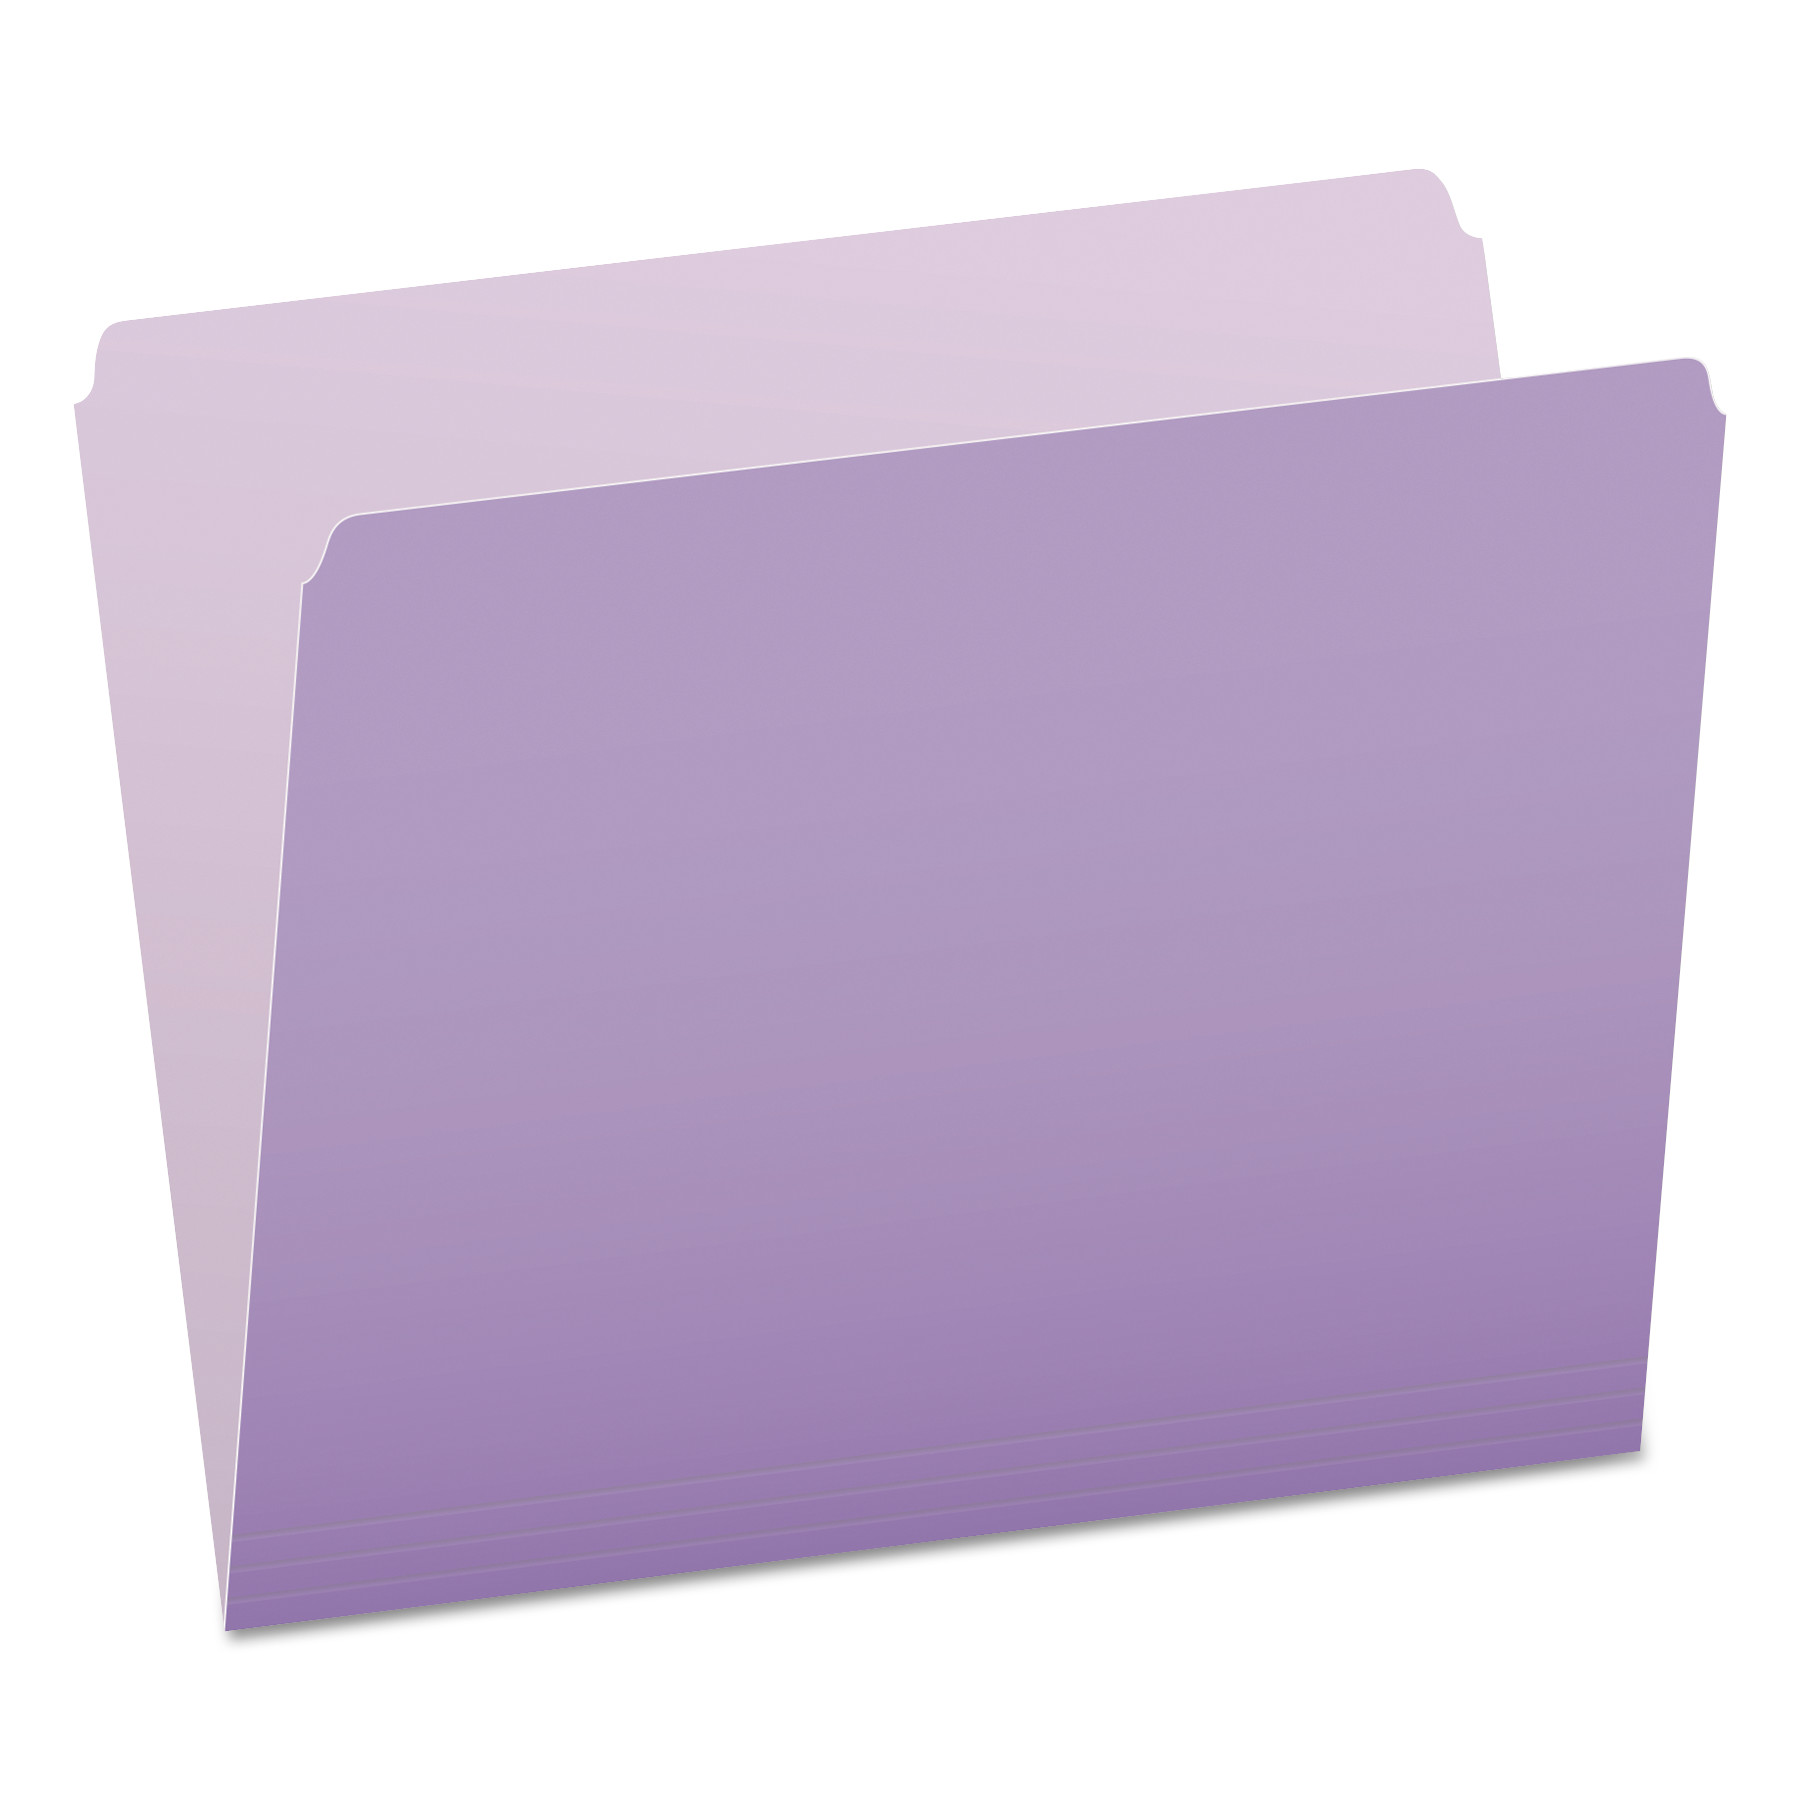  Pendaflex 152 LAV Colored File Folders, Straight Tab, Letter Size, Lavender/Light Lavender, 100/Box (PFX152LAV) 